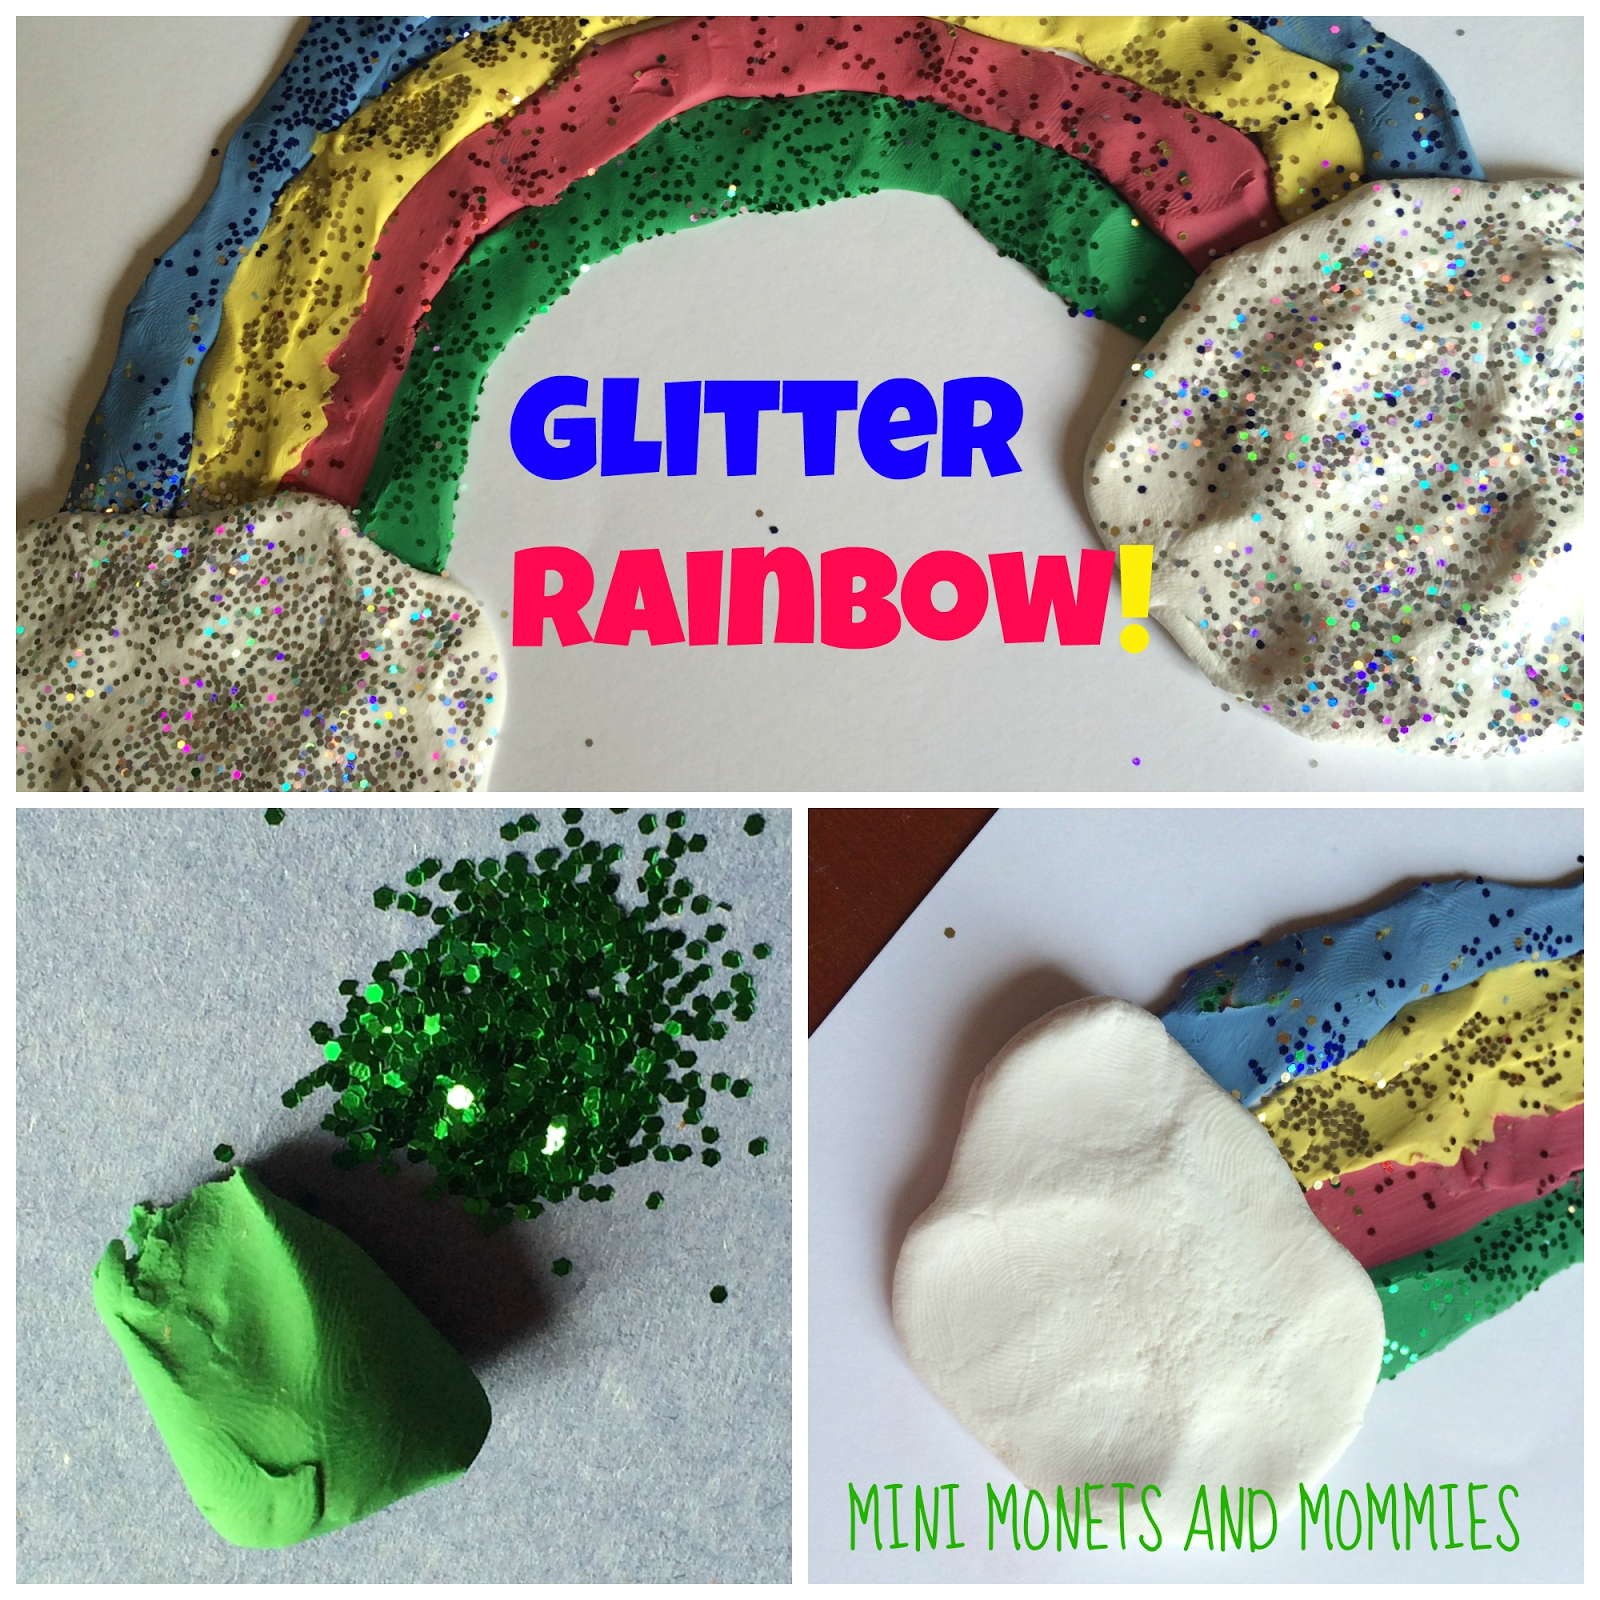 Mini Monets and Mommies: Glitter Rainbows: Kids' Clay Art Activity